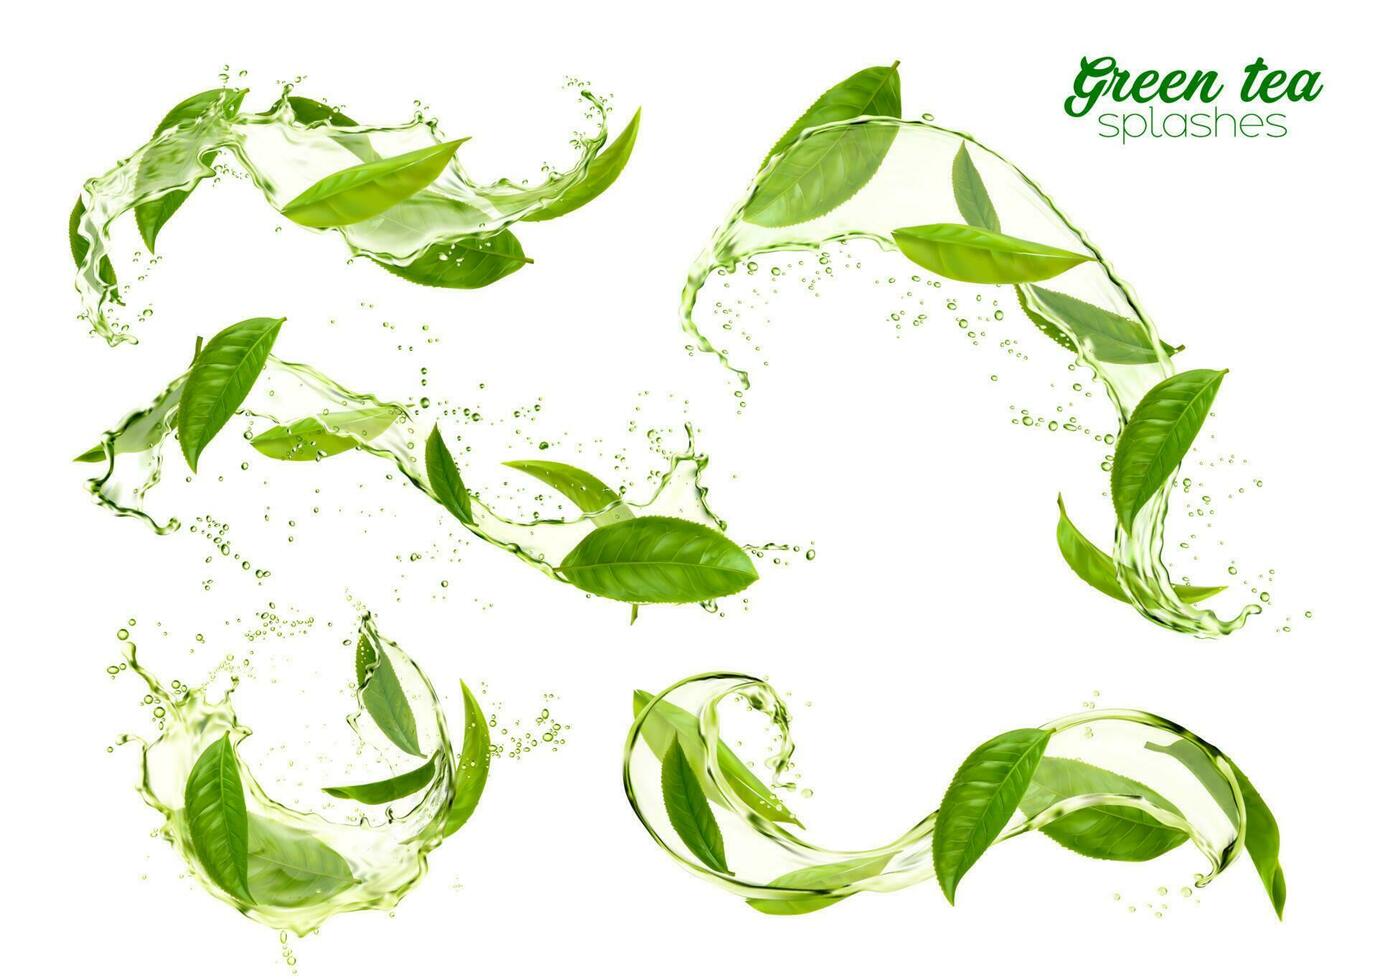 Green tea leaves swirls and splashes, herbal drink vector